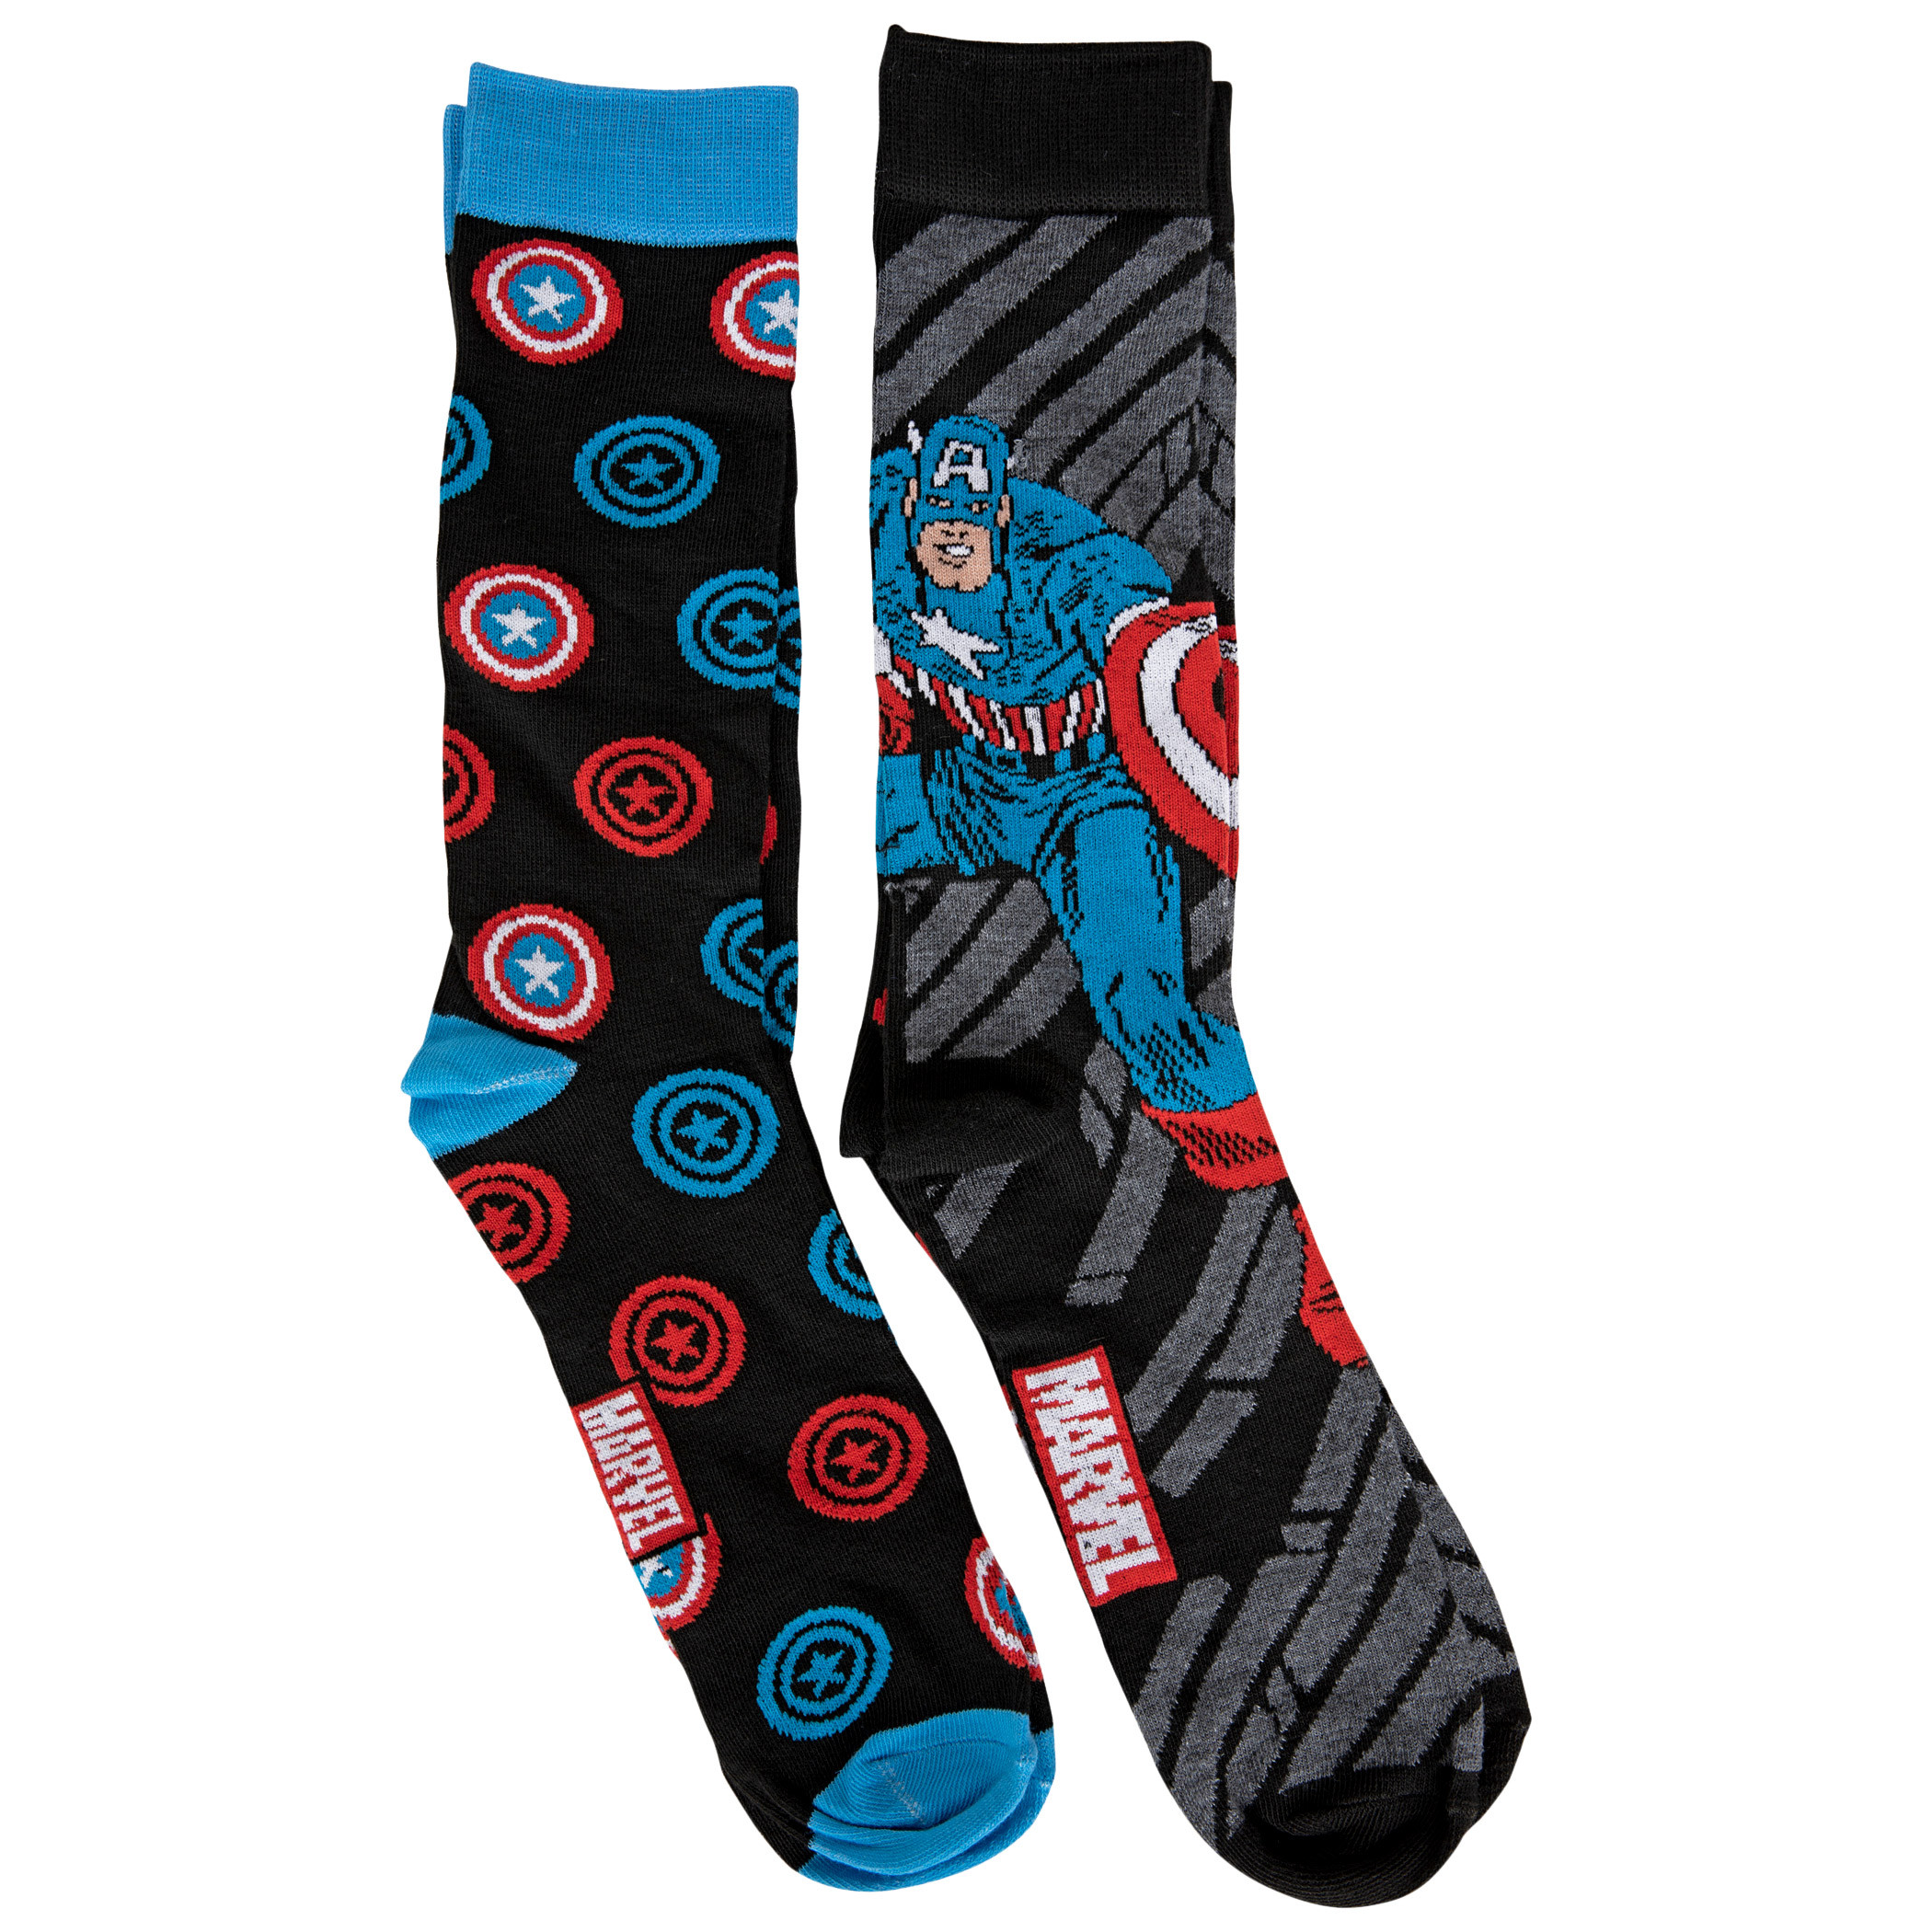 Captain America Standing Character and Logos 2-Pair Pack of Crew Socks